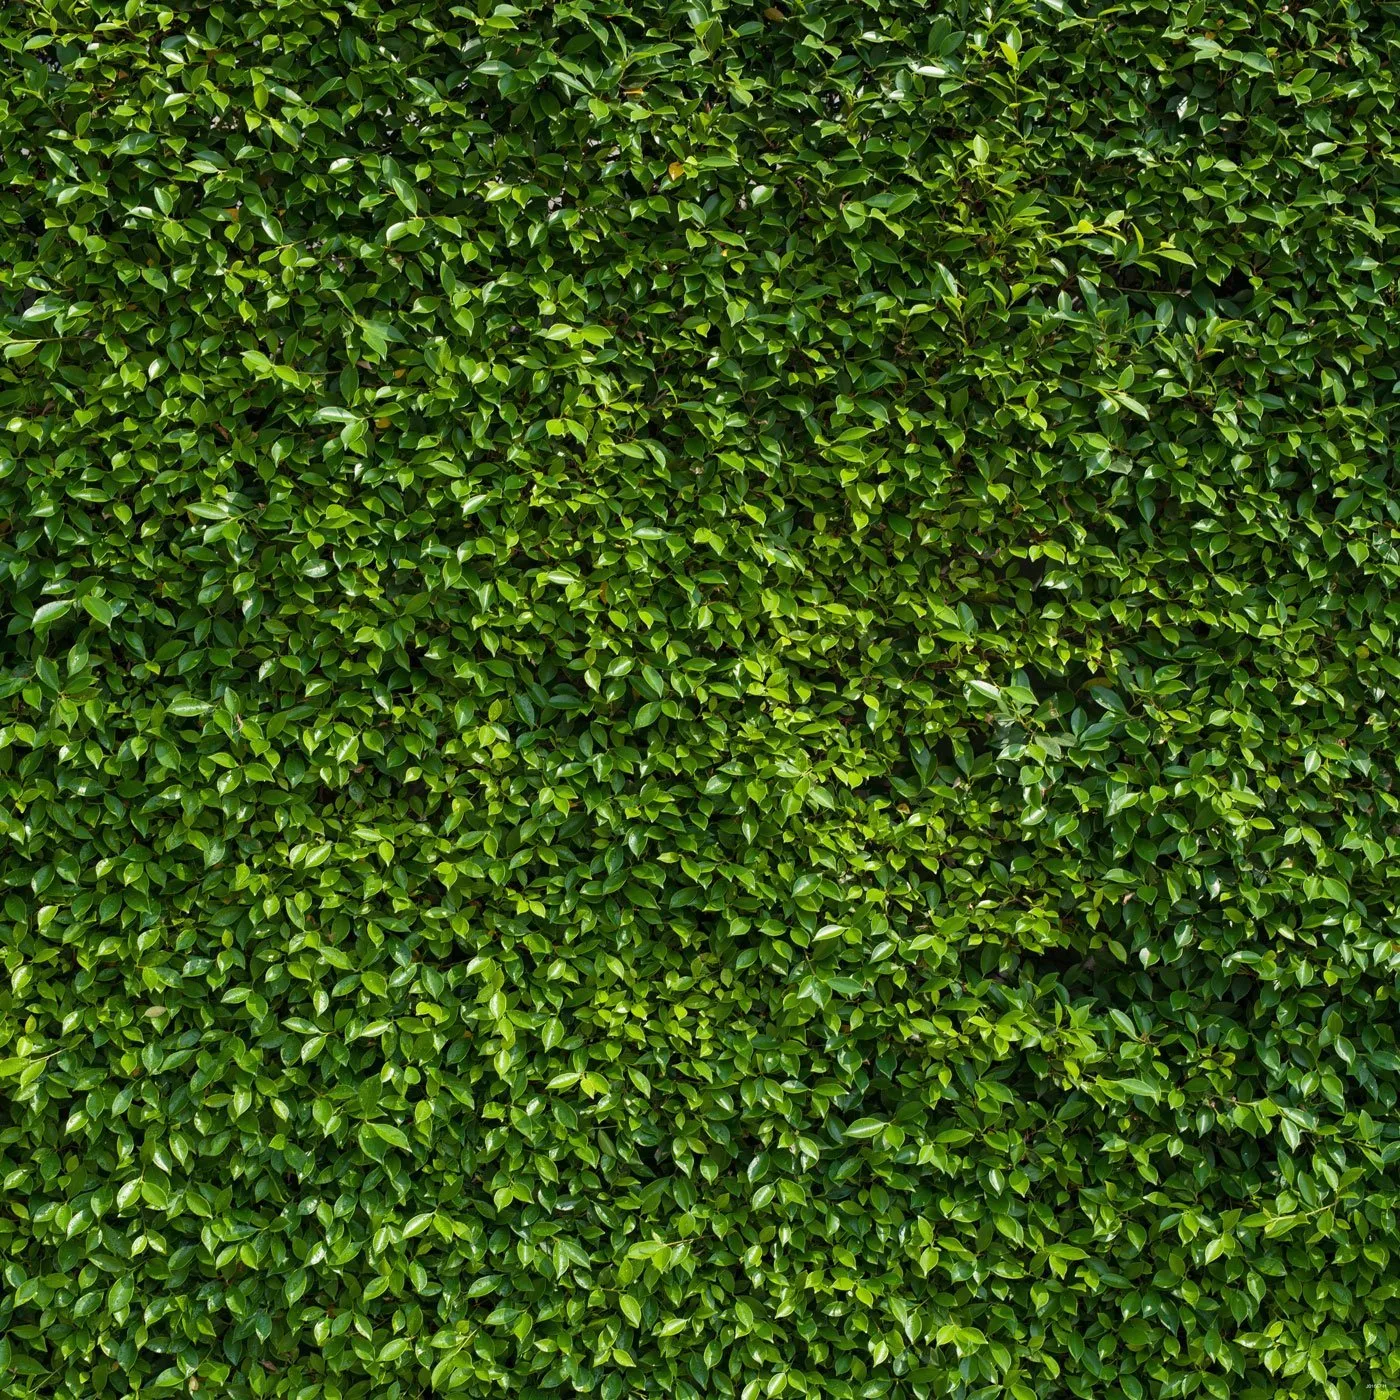 Green Leaves Wall Photography Backdrops Vinyl Spring Theme Photo Shoot Backdrop Children kids Portrait Studio Background 10x10ft